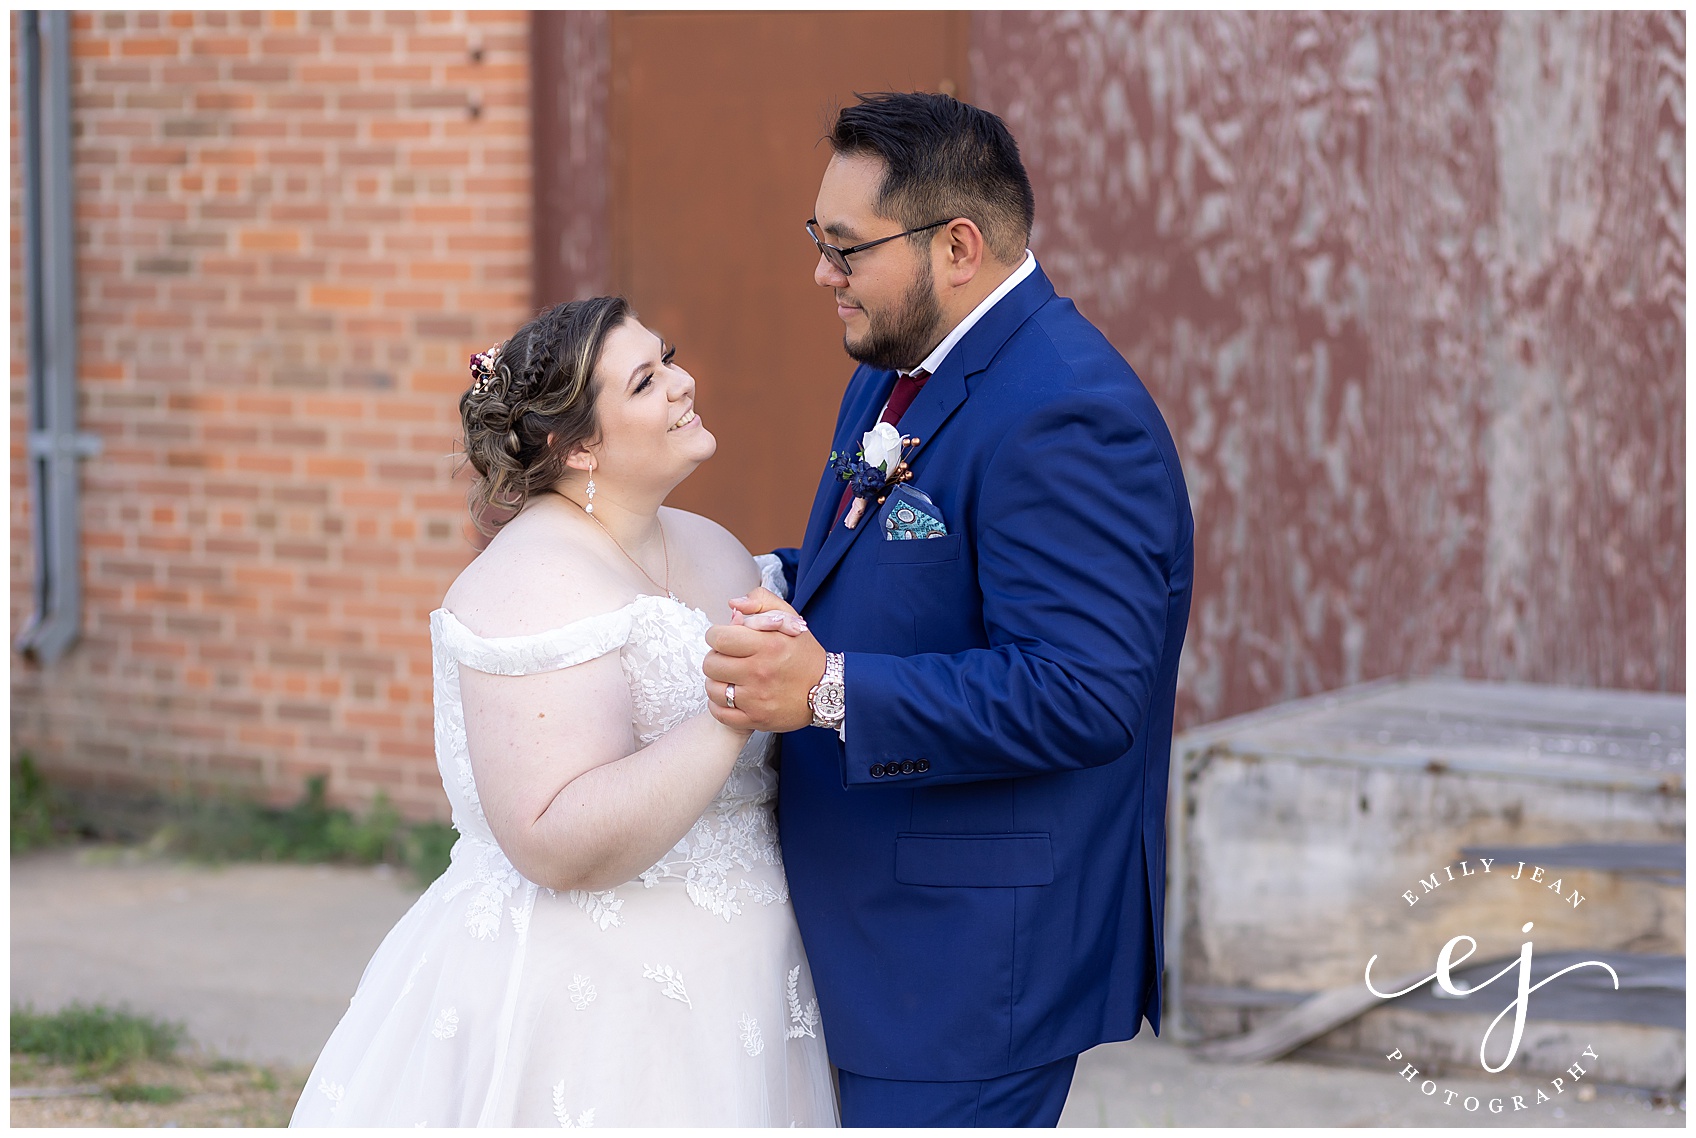 outdoor bride and groom portraits industrial brick yard